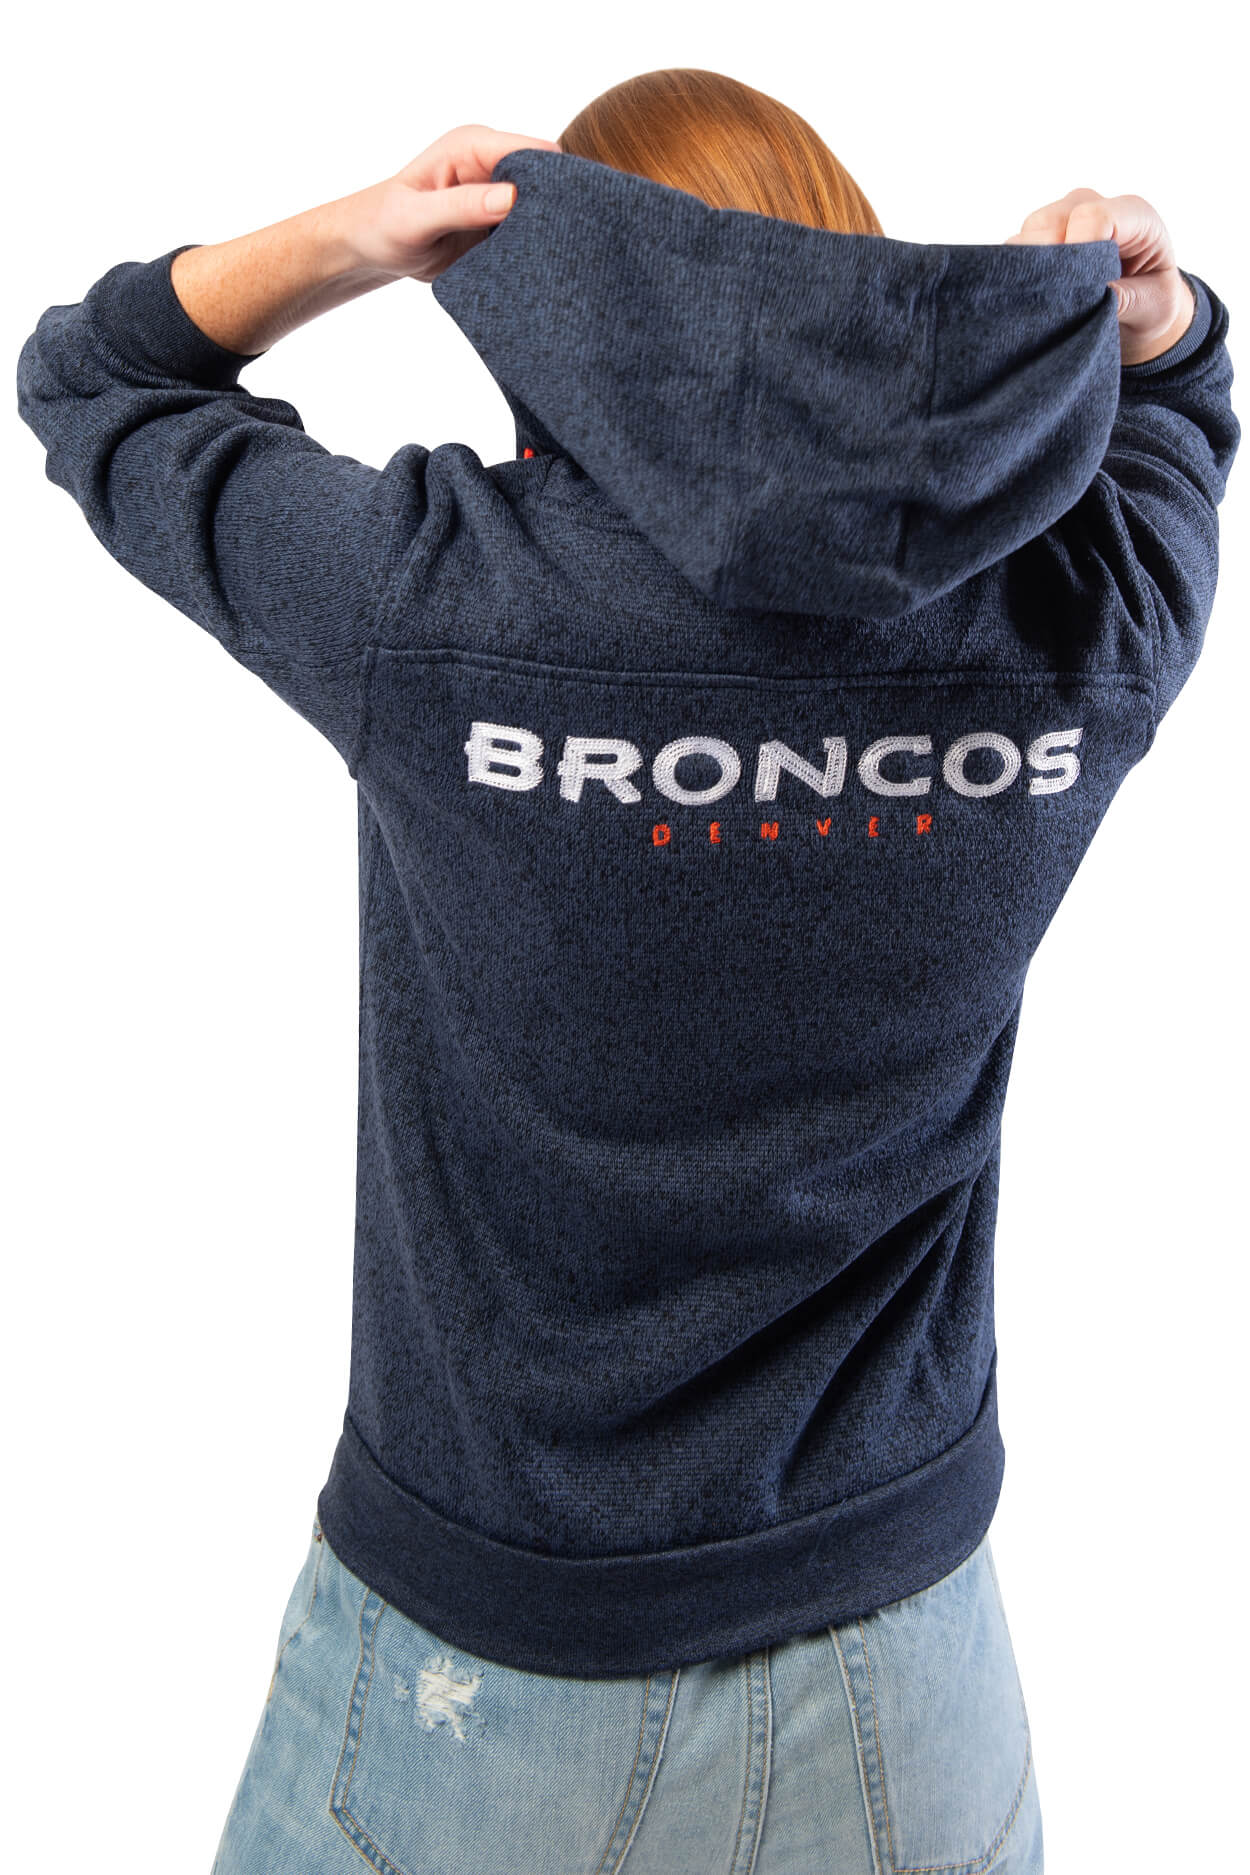 NFL Denver Broncos Women's Full Zip Hoodie|Denver Broncos